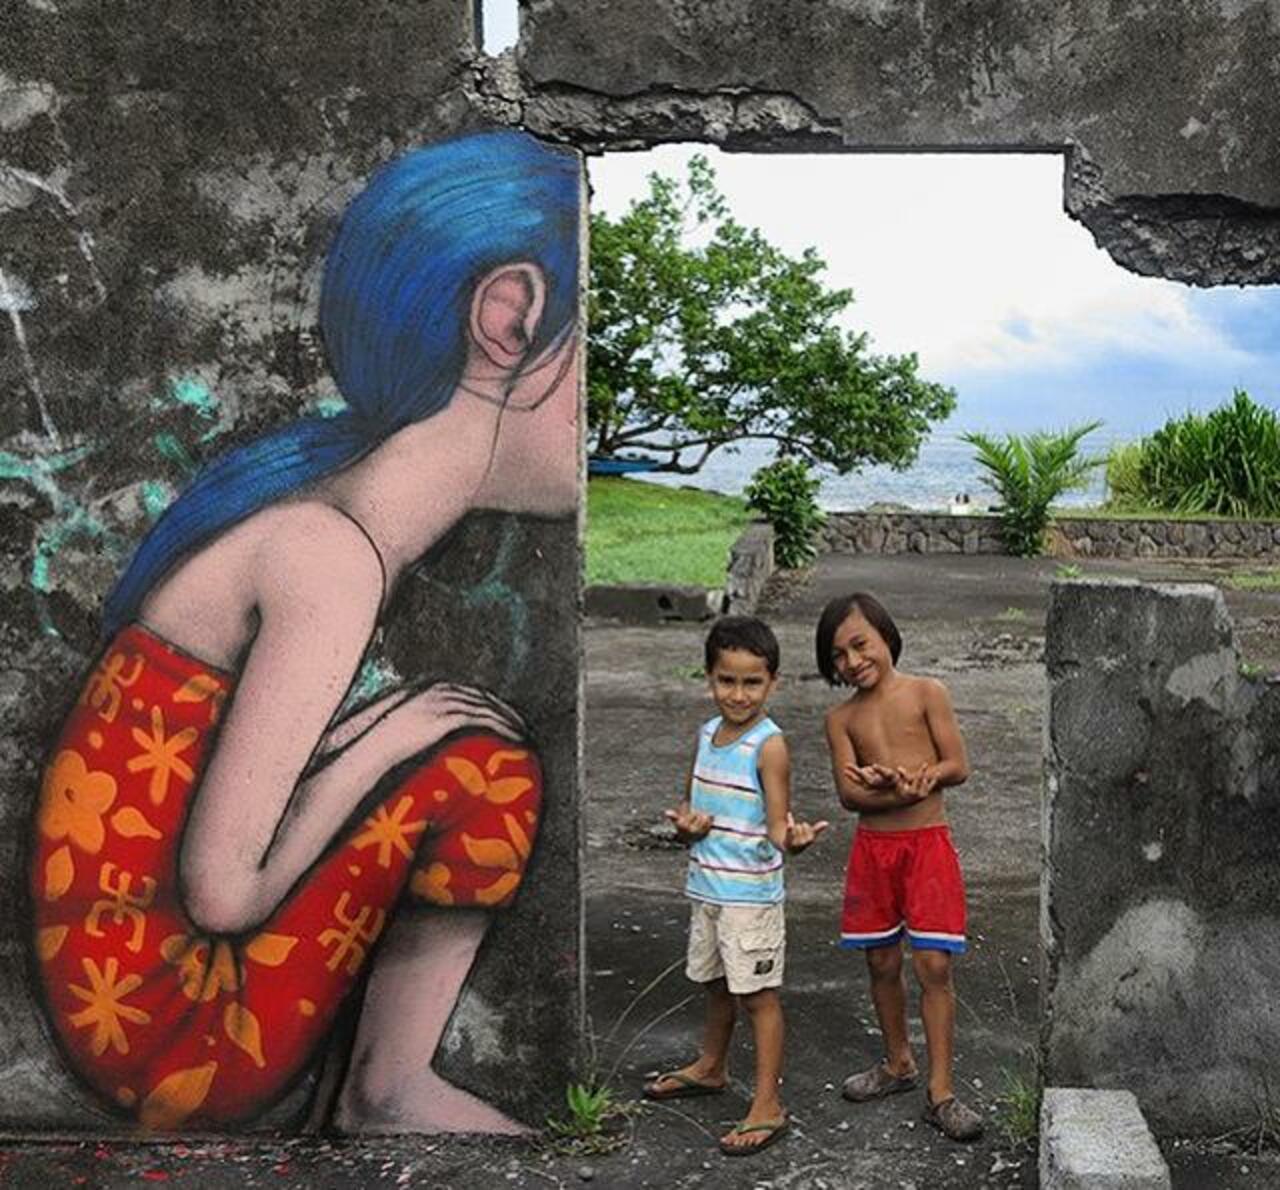 Street Art wall by Seth Globepainter in Mataiea, Tahiti 

#art #arte #graffiti #streetart http://t.co/xsDYNrgE5b